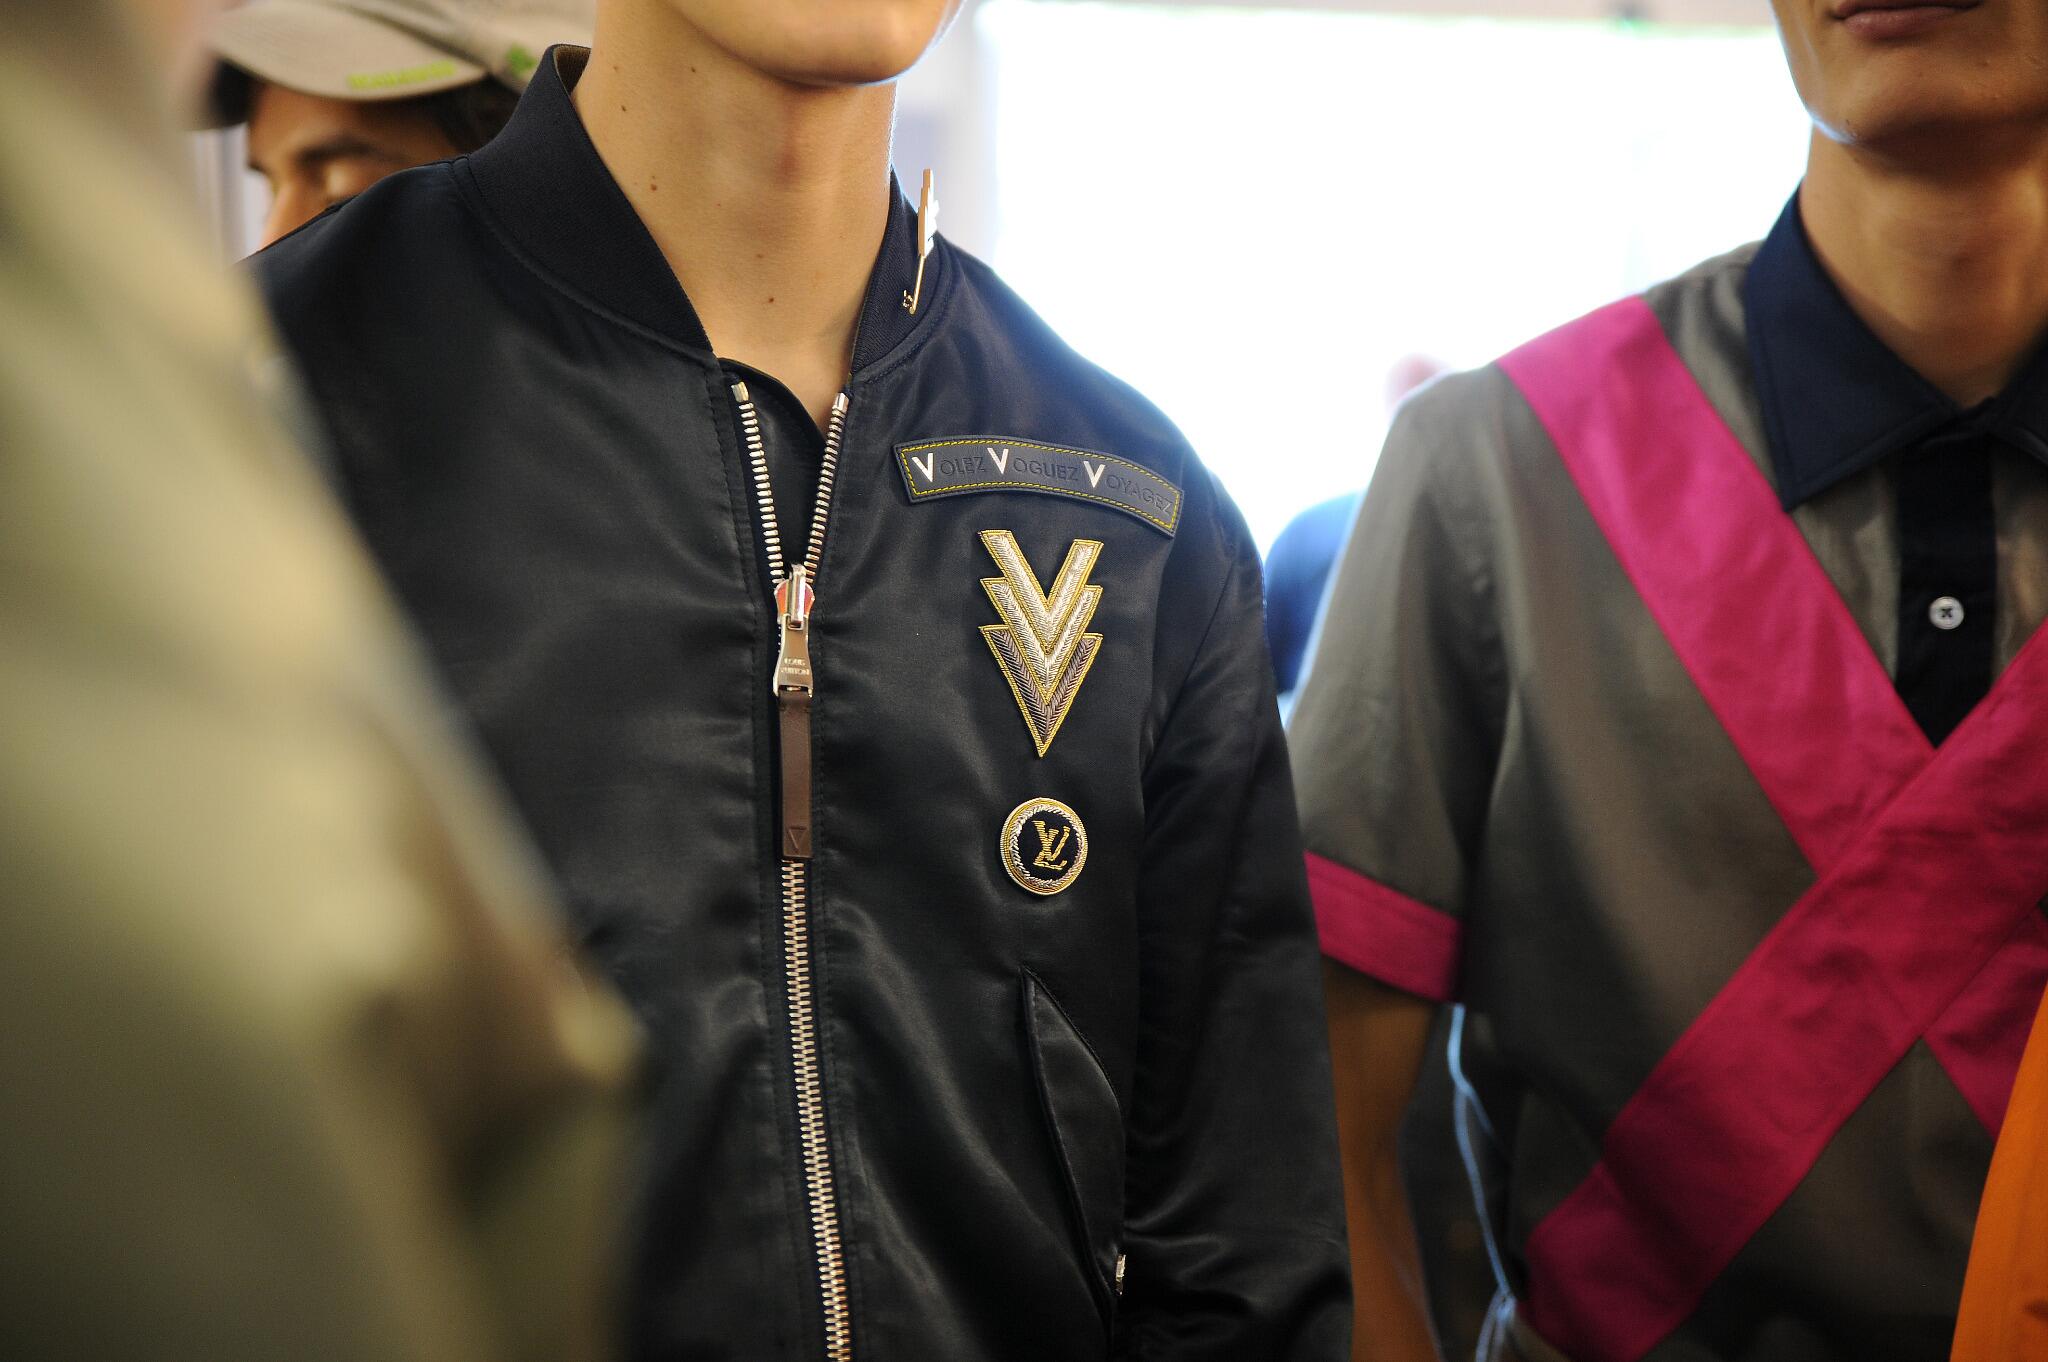 Louis Vuitton on X: VVV emblazoned jackets at the #LouisVuitton Men's  Show, on  #LVLive ©M Dortomb   / X